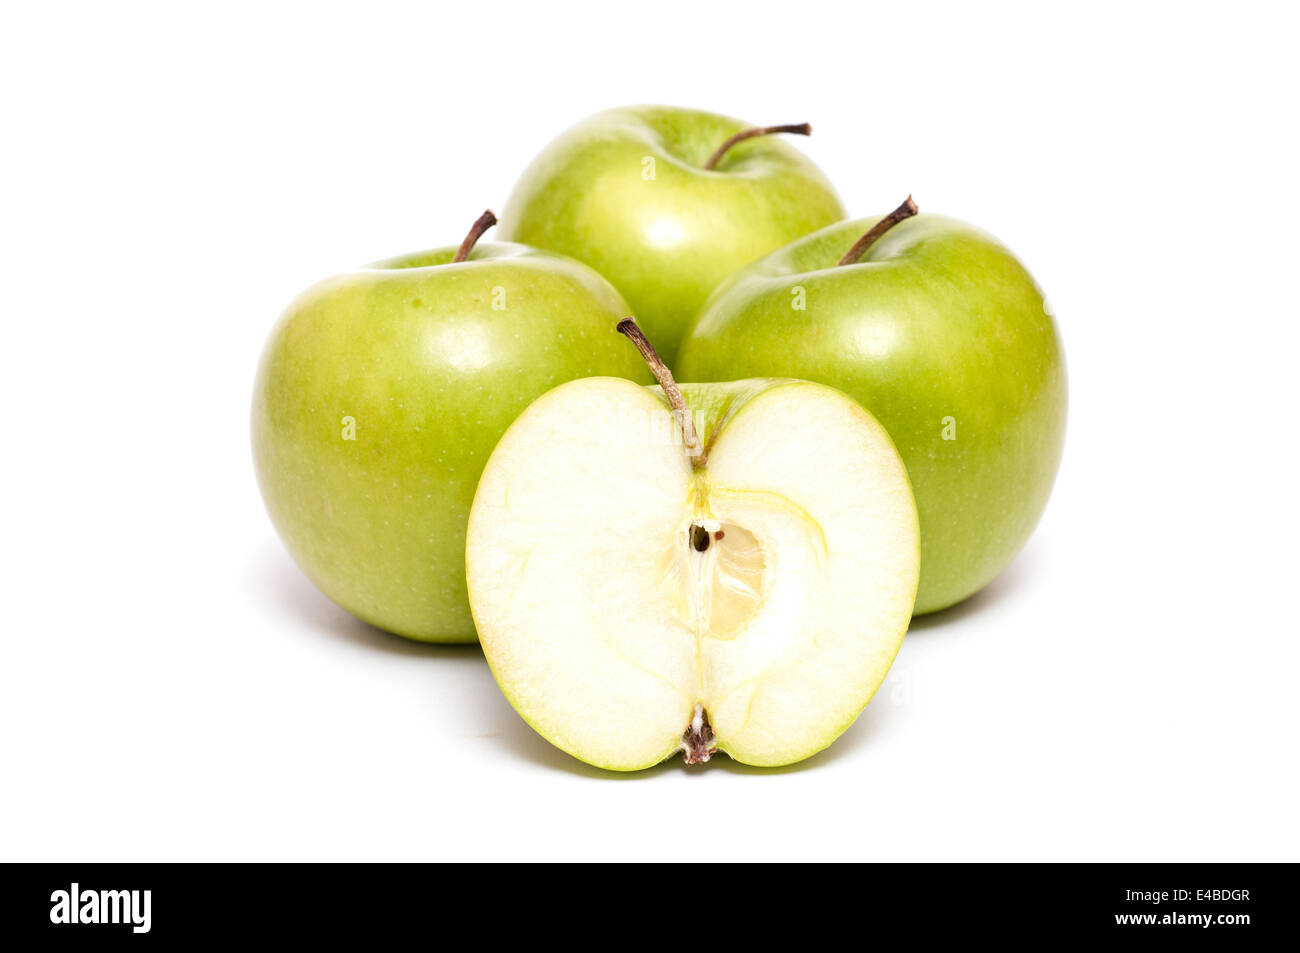 Four green apples Stock Photo